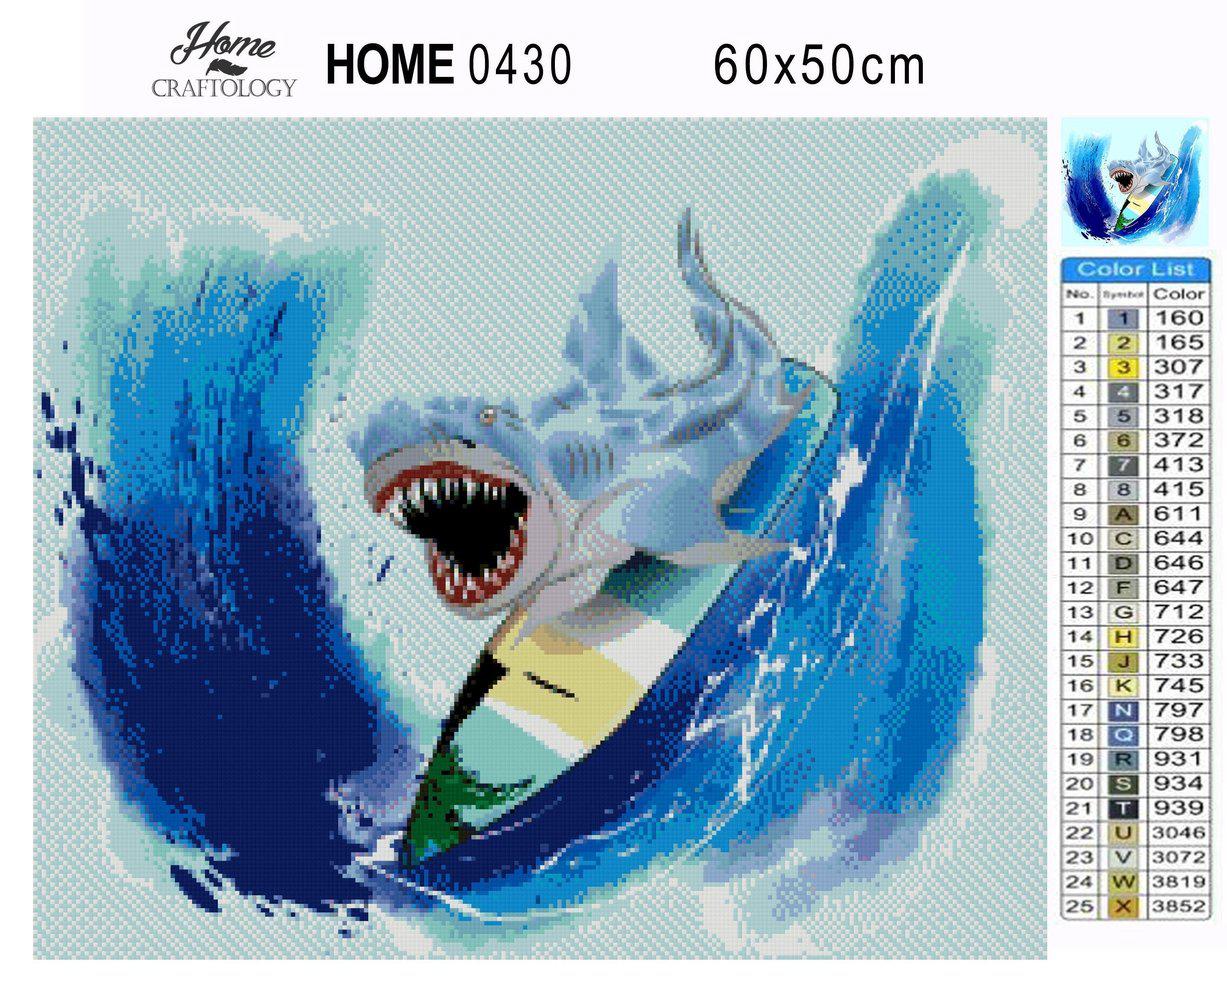 Surfing Shark - Premium Diamond Painting Kit